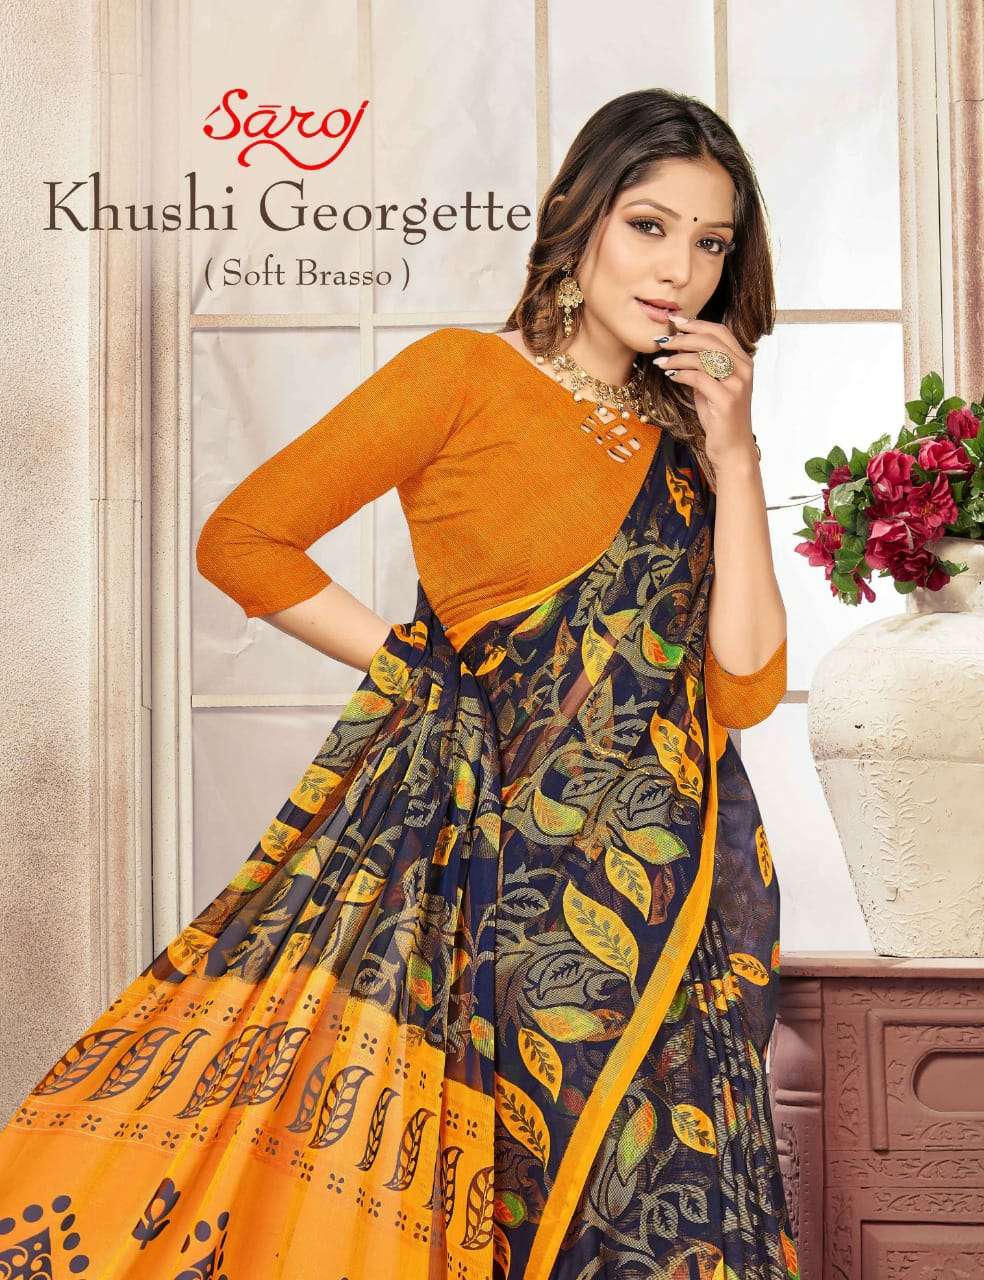 Saroj khushi georgette fancy sarees collection